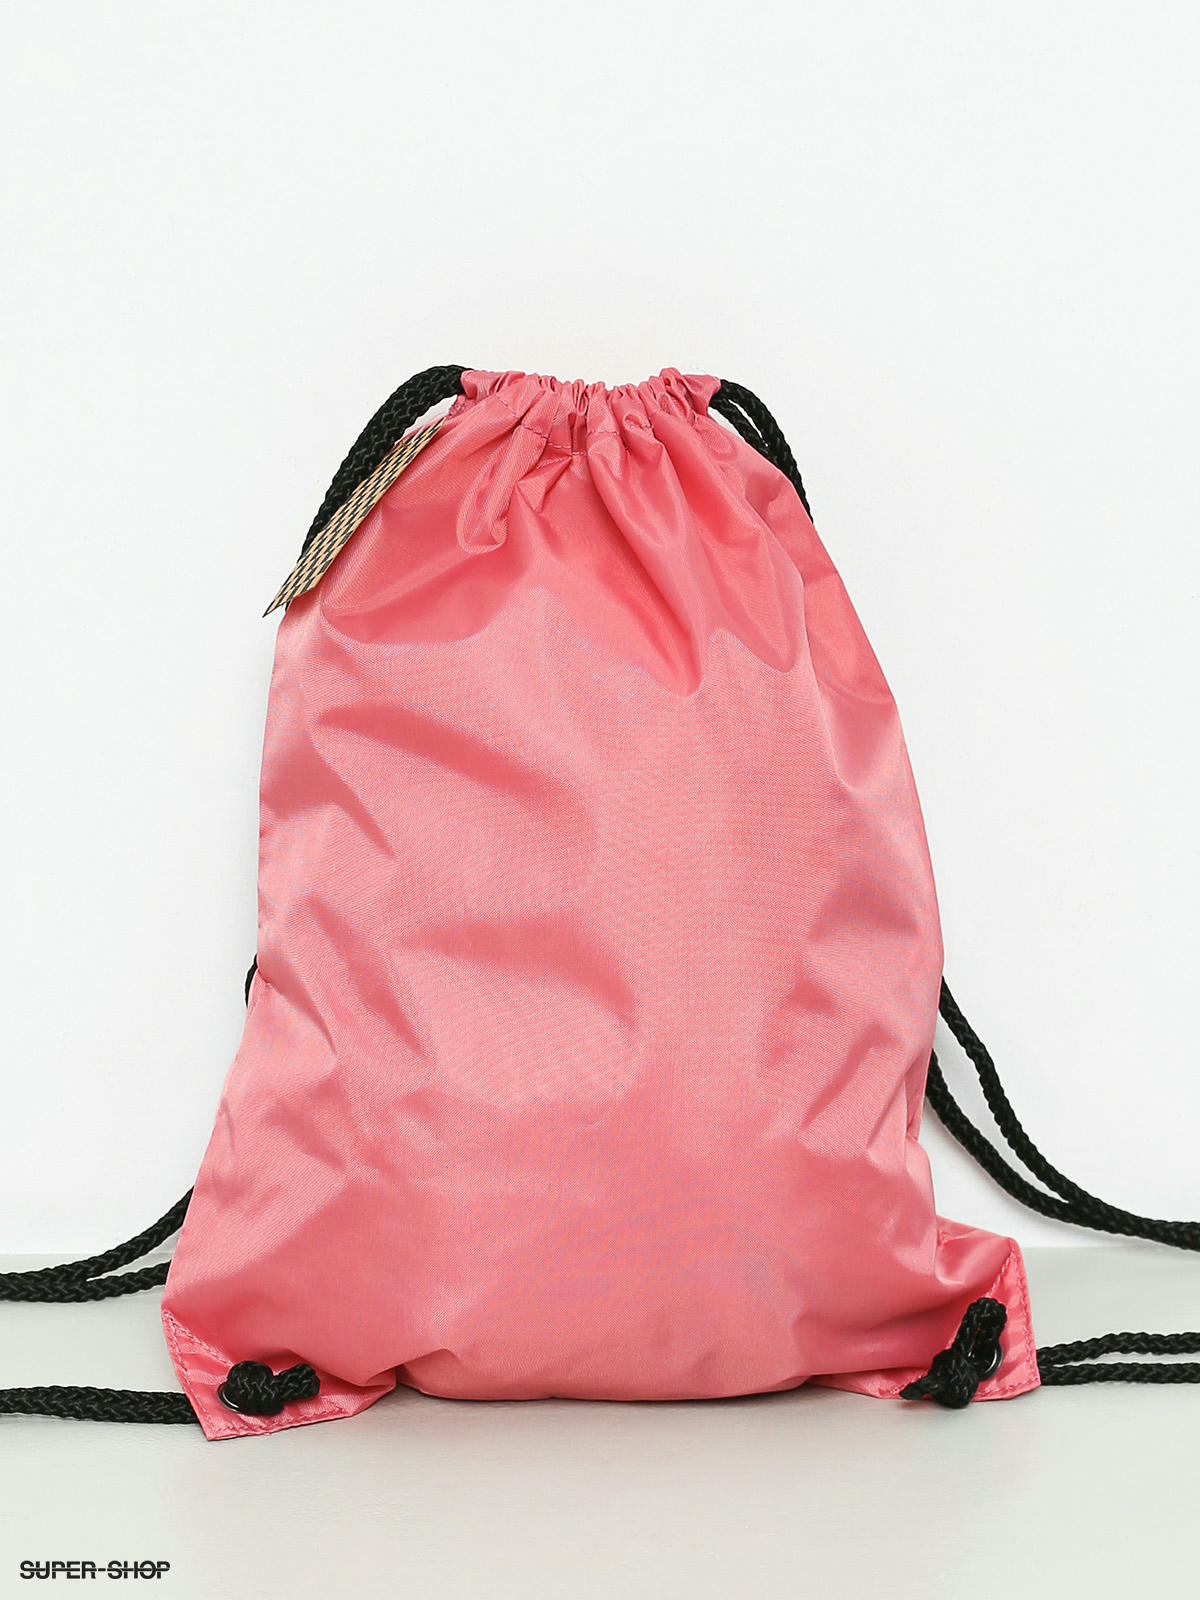 vans strawberry backpack